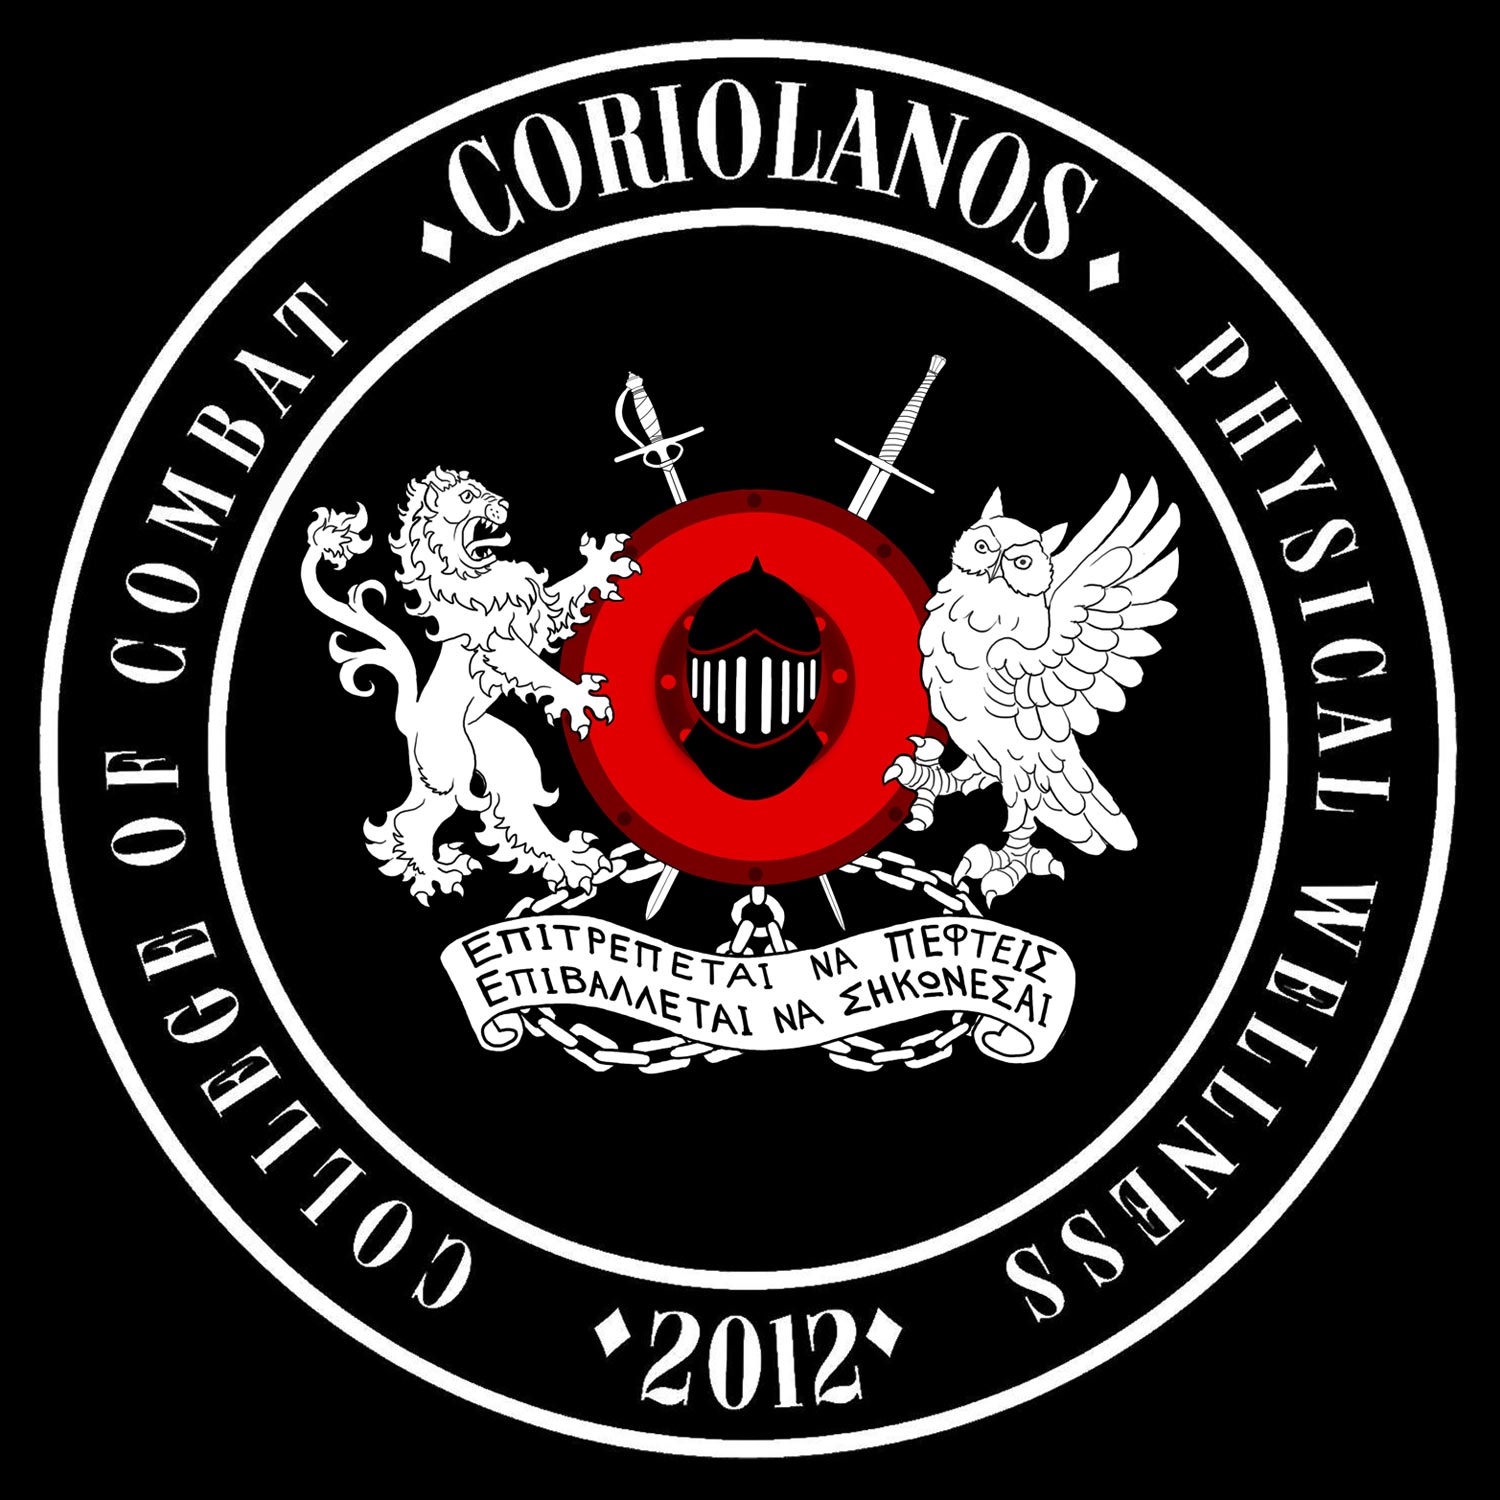 Coriolanos – College of Combat & Physical Wellness